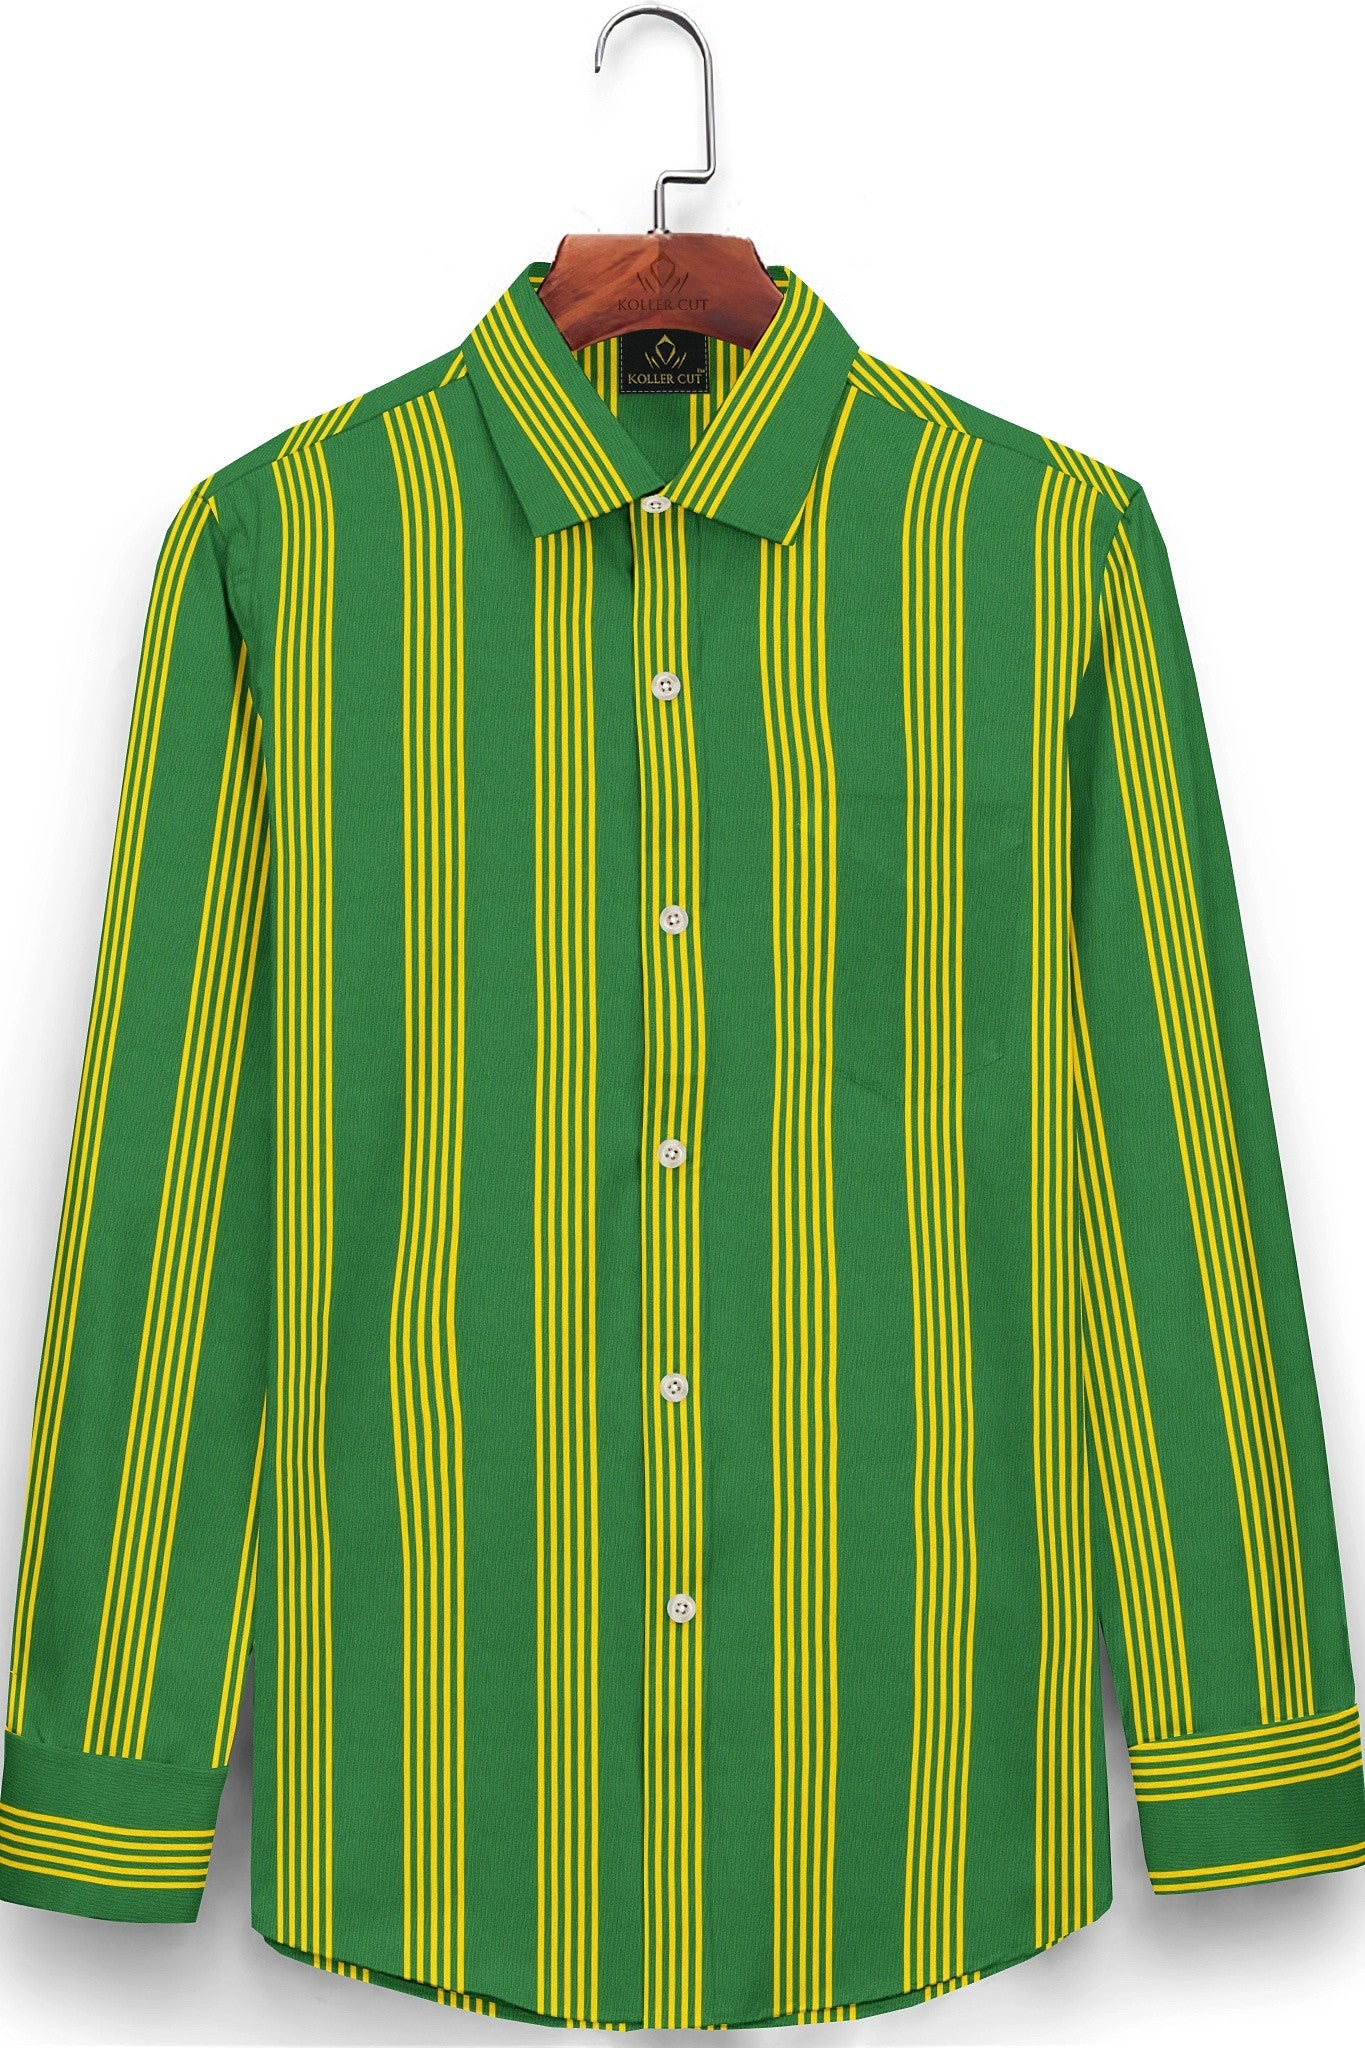 Kelly Green and Minion Yellow Stripes Cotton Shirt